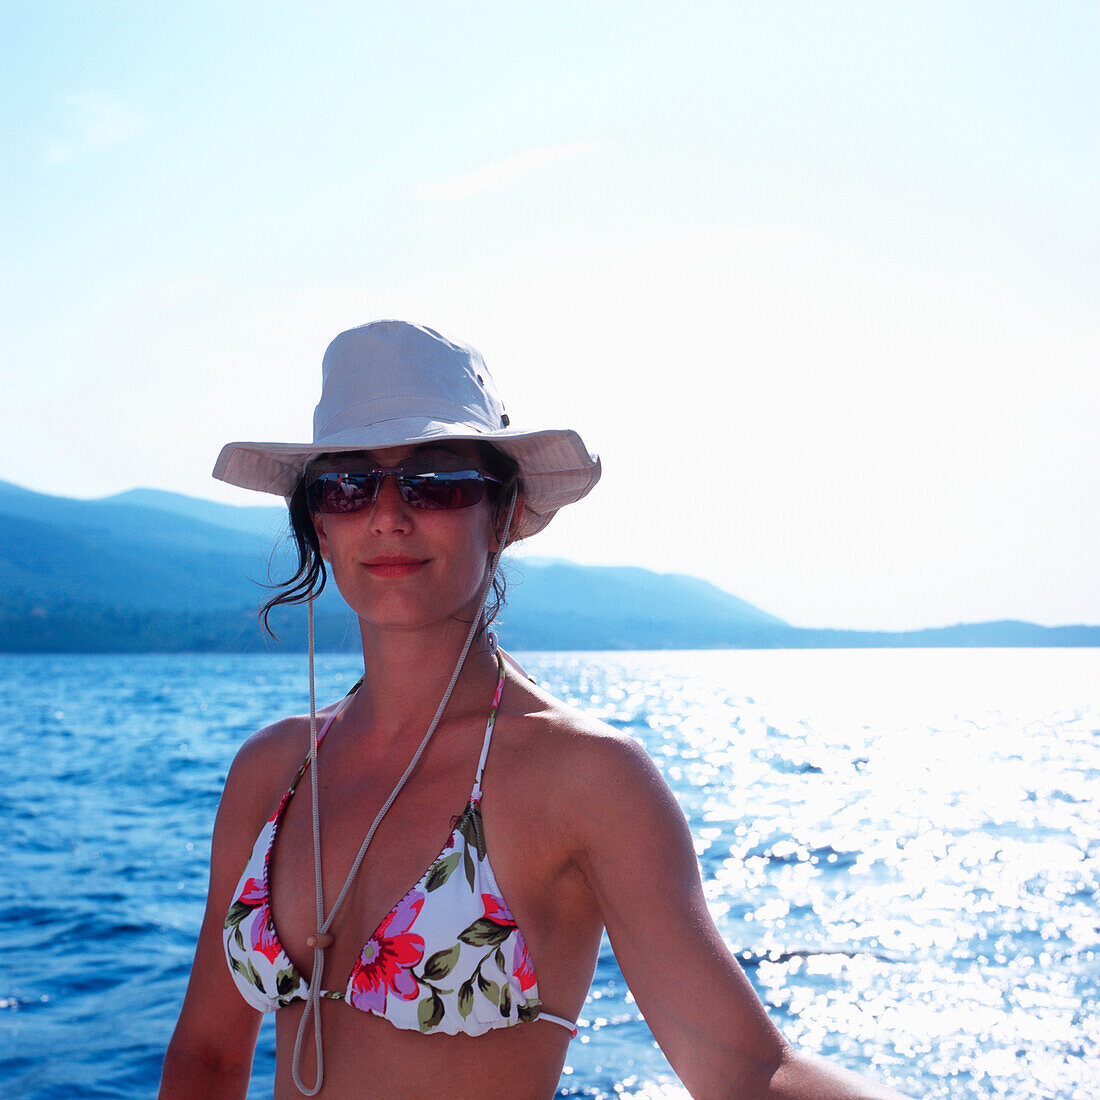 Woman wearing bikini, sunglasses and a hat on a sailboat, Dalmatia, Croatia